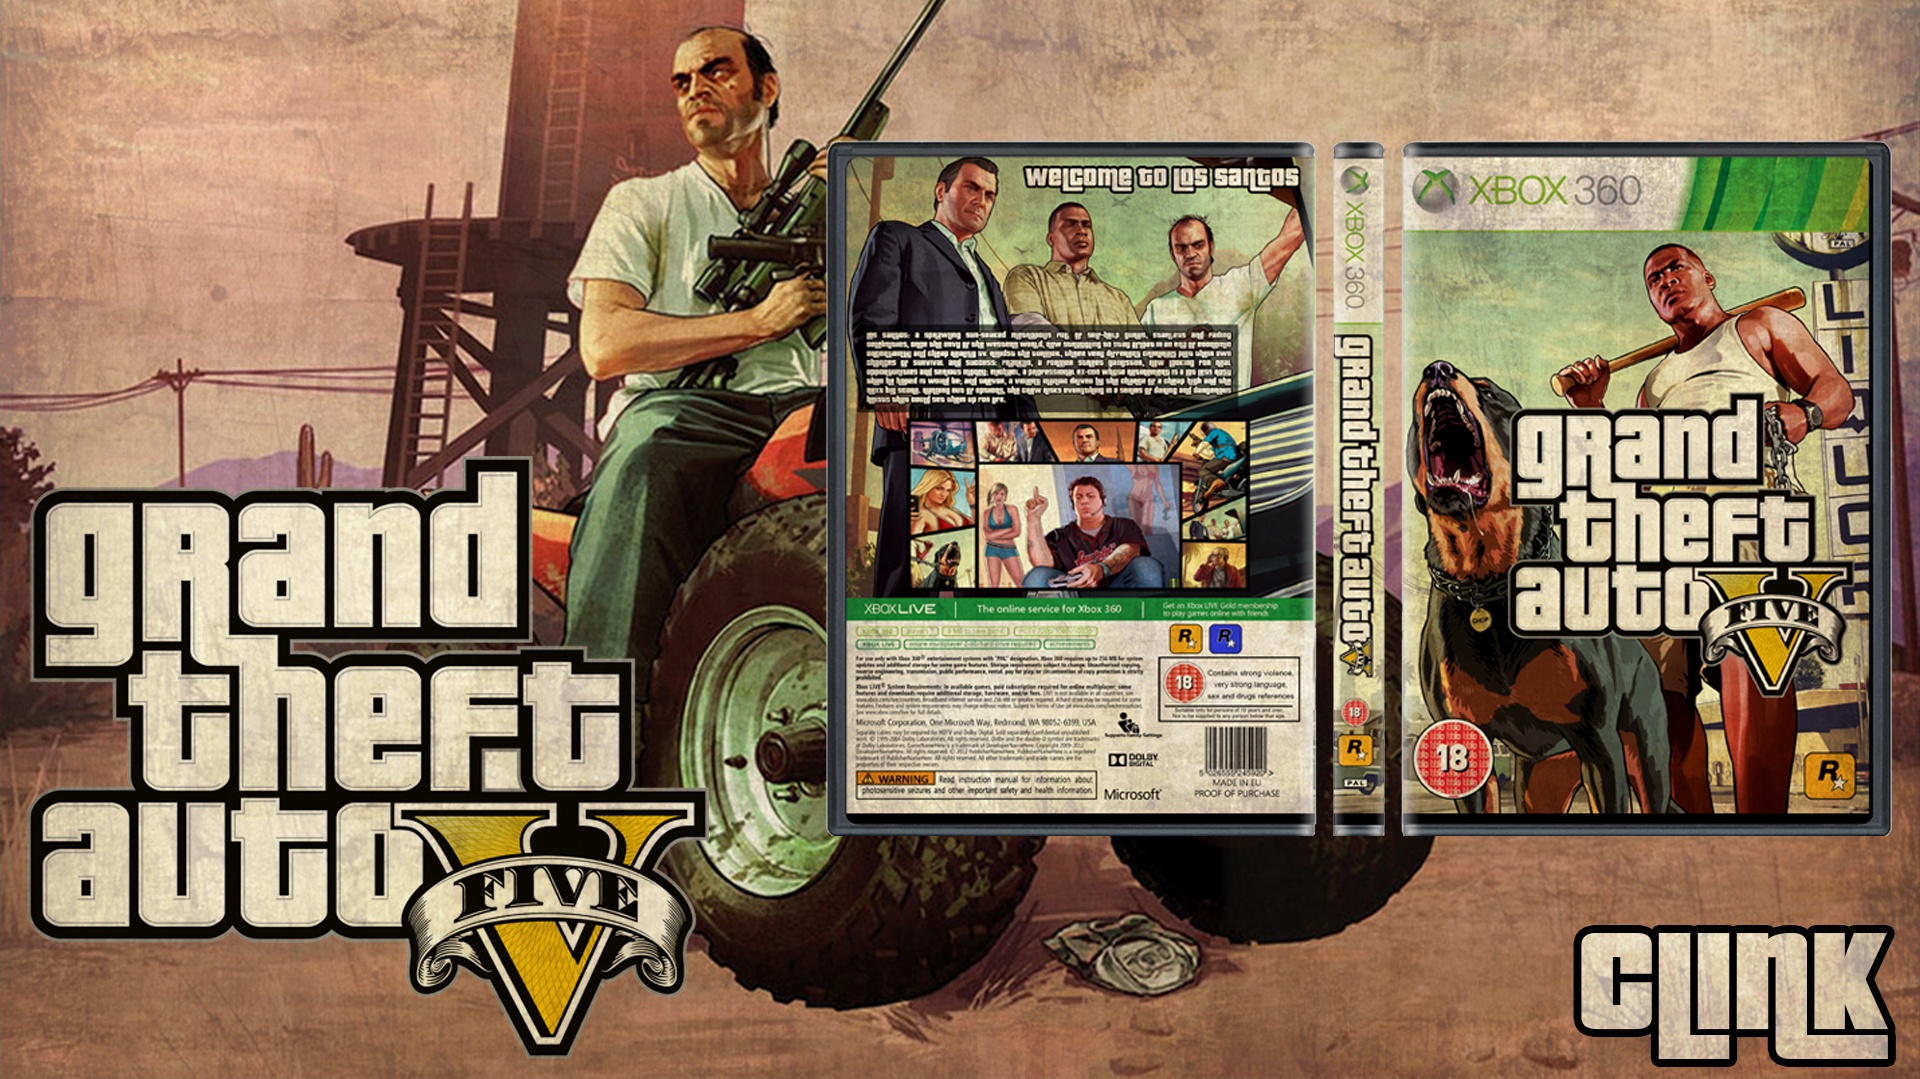 Игра на xbox 360 гта. GTA 5 Xbox 360 обложка. Grand Theft auto v обложка Xbox 360. GTA 5 Xbox 360 Cover. Xbox 360 обложка игры Grand Theft auto 5.